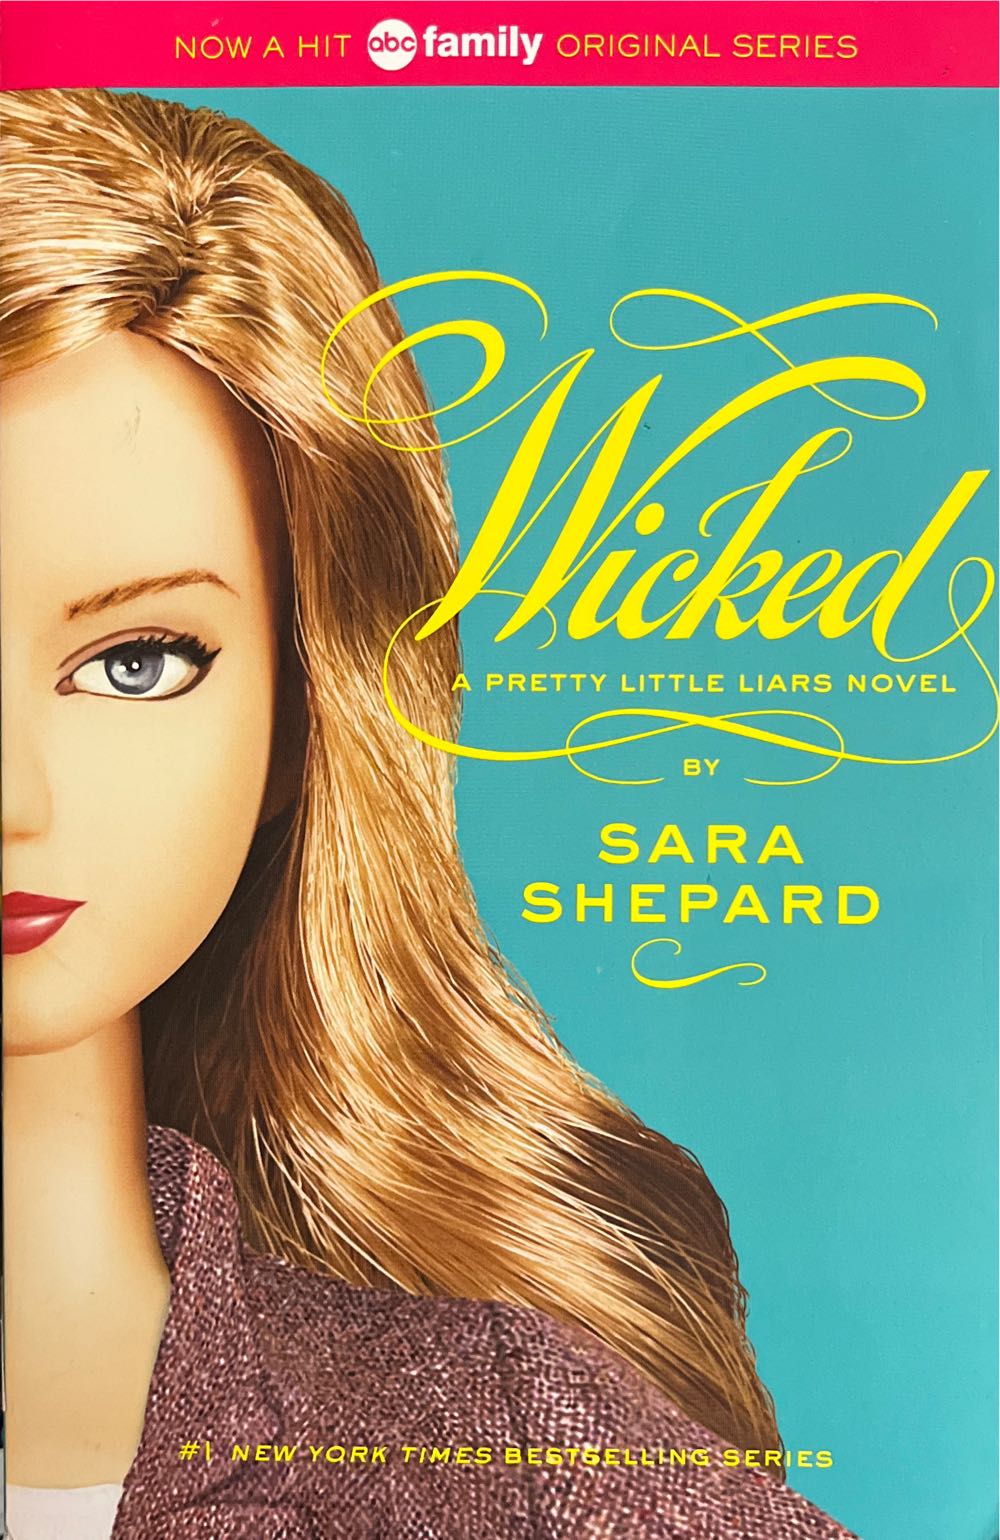 Wicked - Sara Shepard (HarperTeen - Paperback) book collectible [Barcode 9780061566103] - Main Image 3